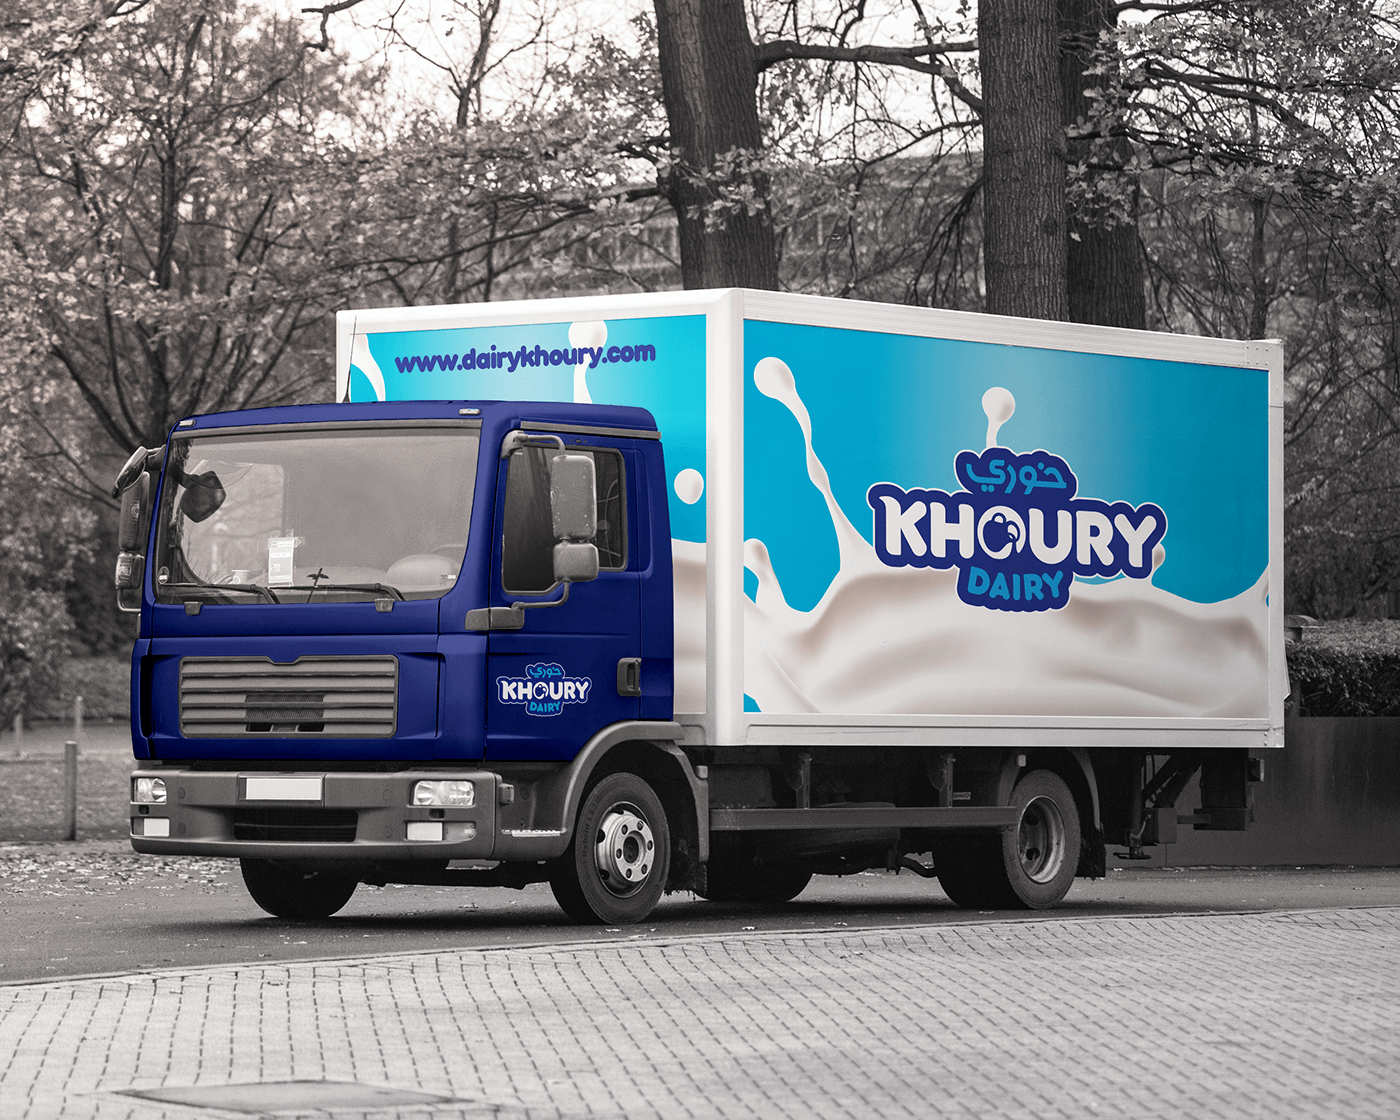 Dairy milk lebanon middle east Food  restaurant brand identity Graphic Designer visual identity khoury